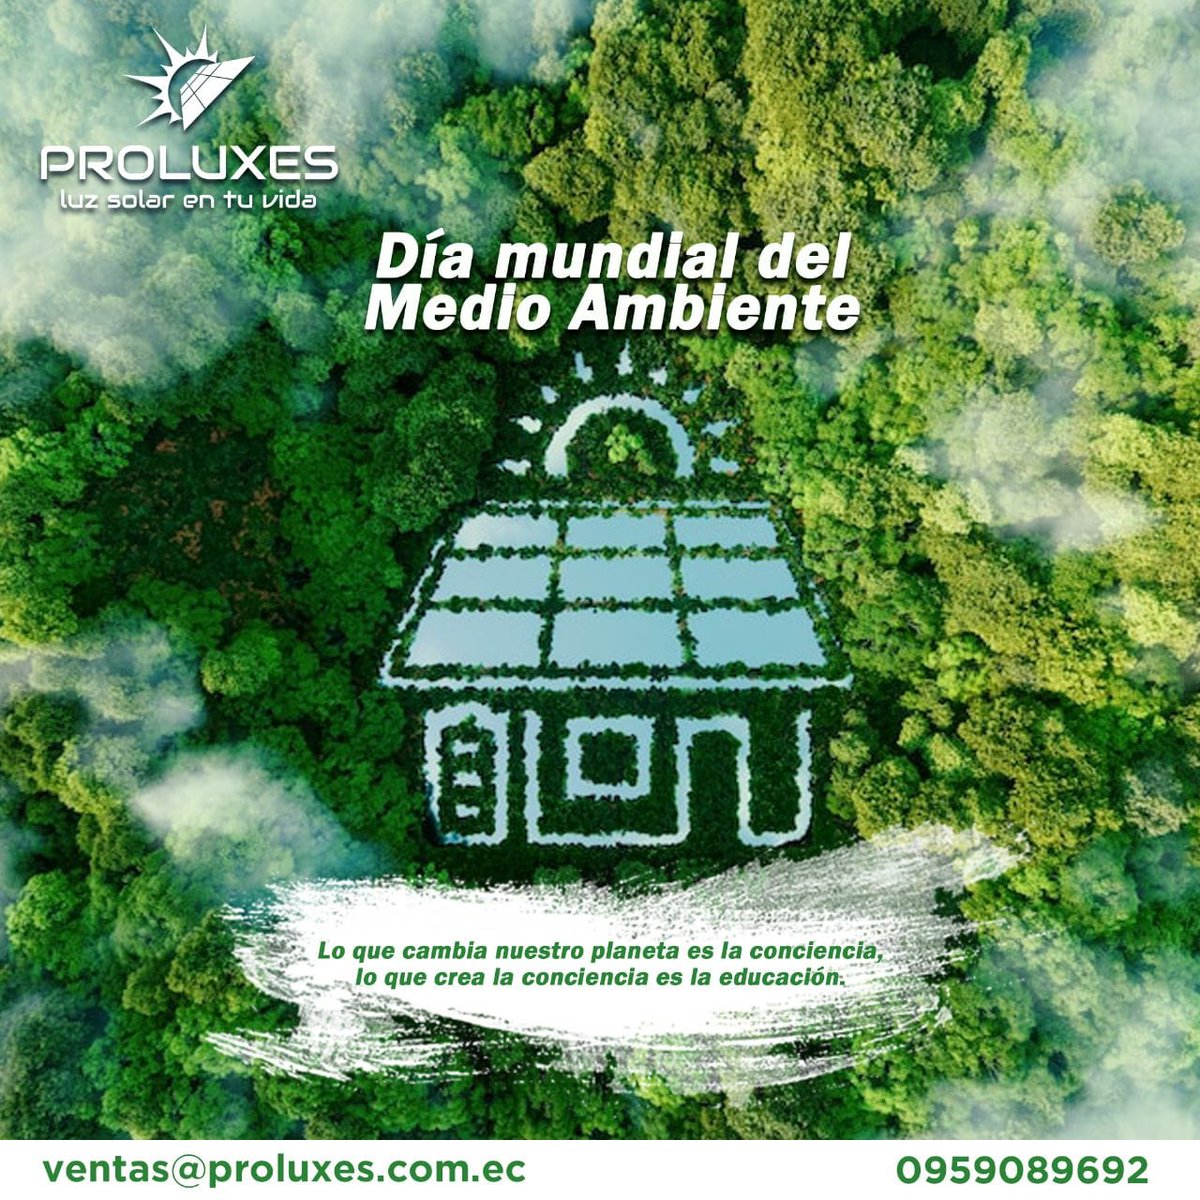 Lo que cambia nuestro Planeta es la conciencia, lo que crea la conciencia es la educación 
.
.
.
#medioambiente #cuidaelambiente #cuidaelplaneta #cuidalanaturaleza #ahorrodenergia #agua #naturaleza #flora #Samborondon #Guayaquil #Quito #proluxes